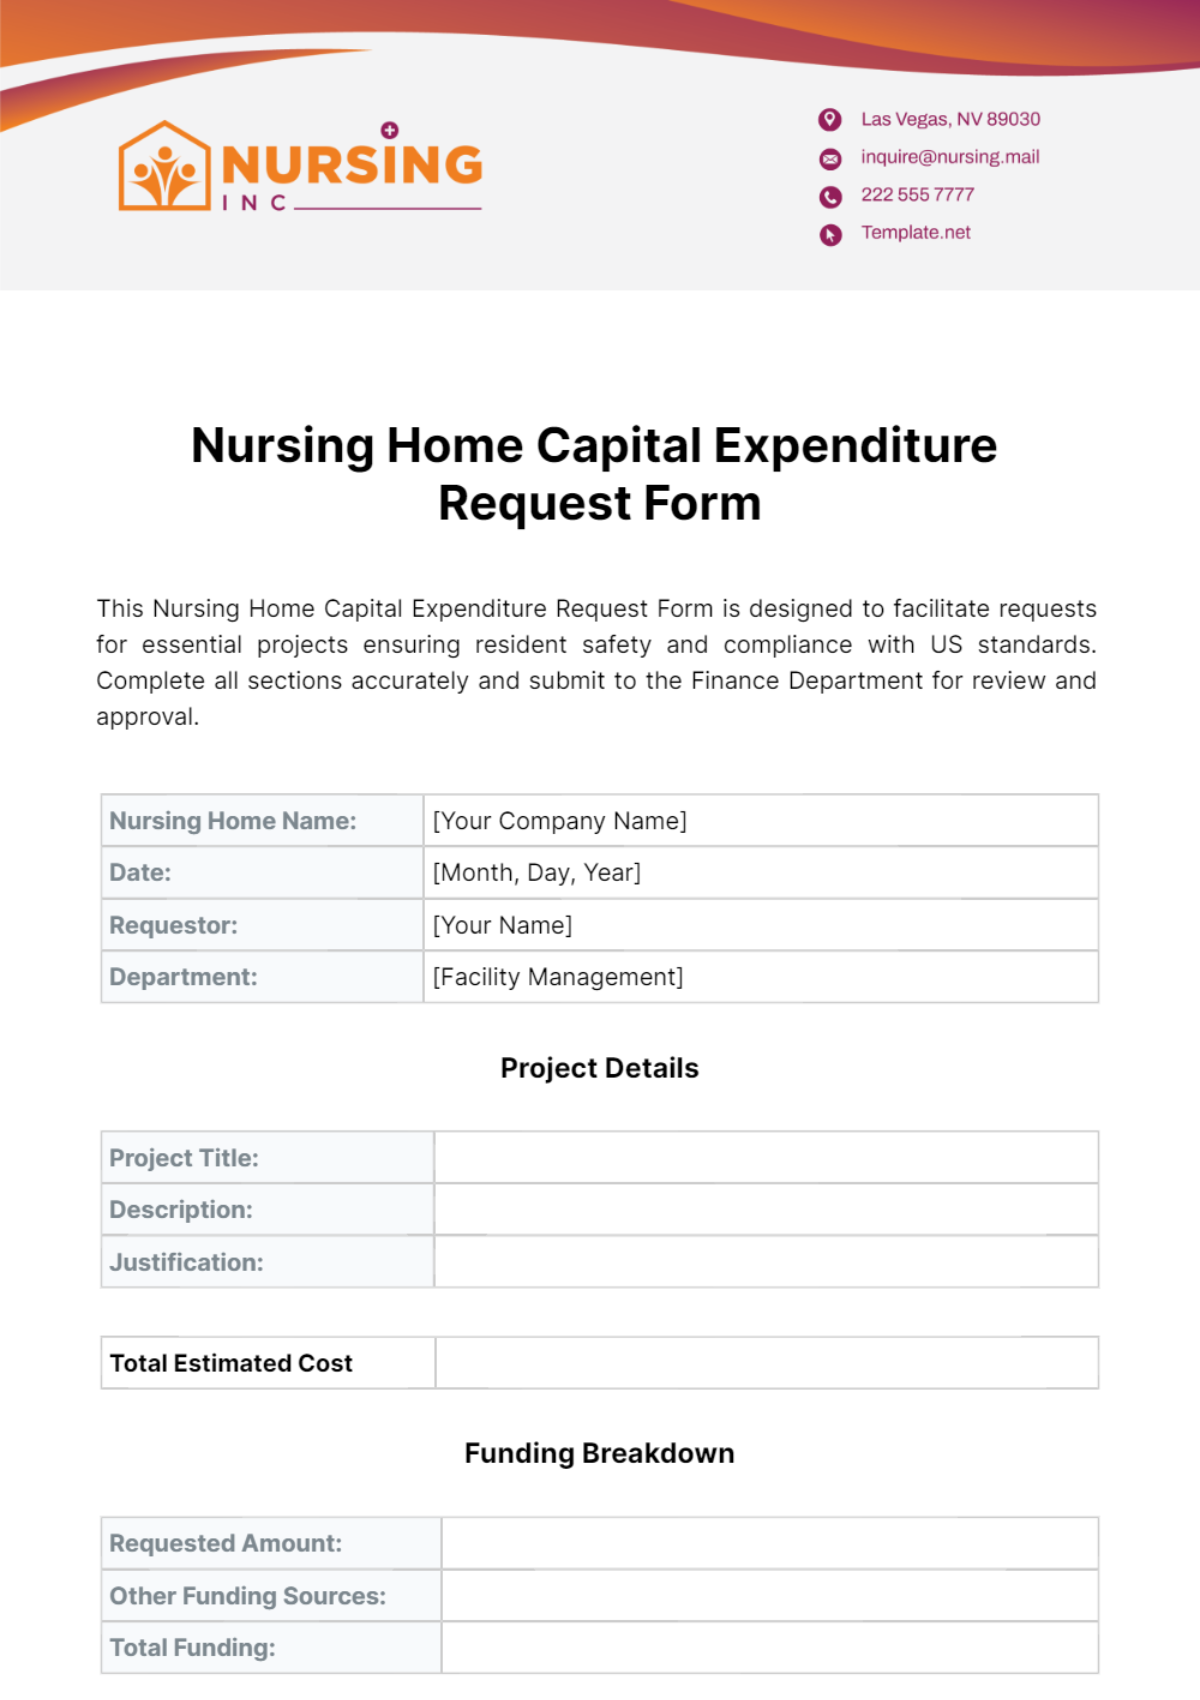 Nursing Home Capital Expenditure Request Form Template